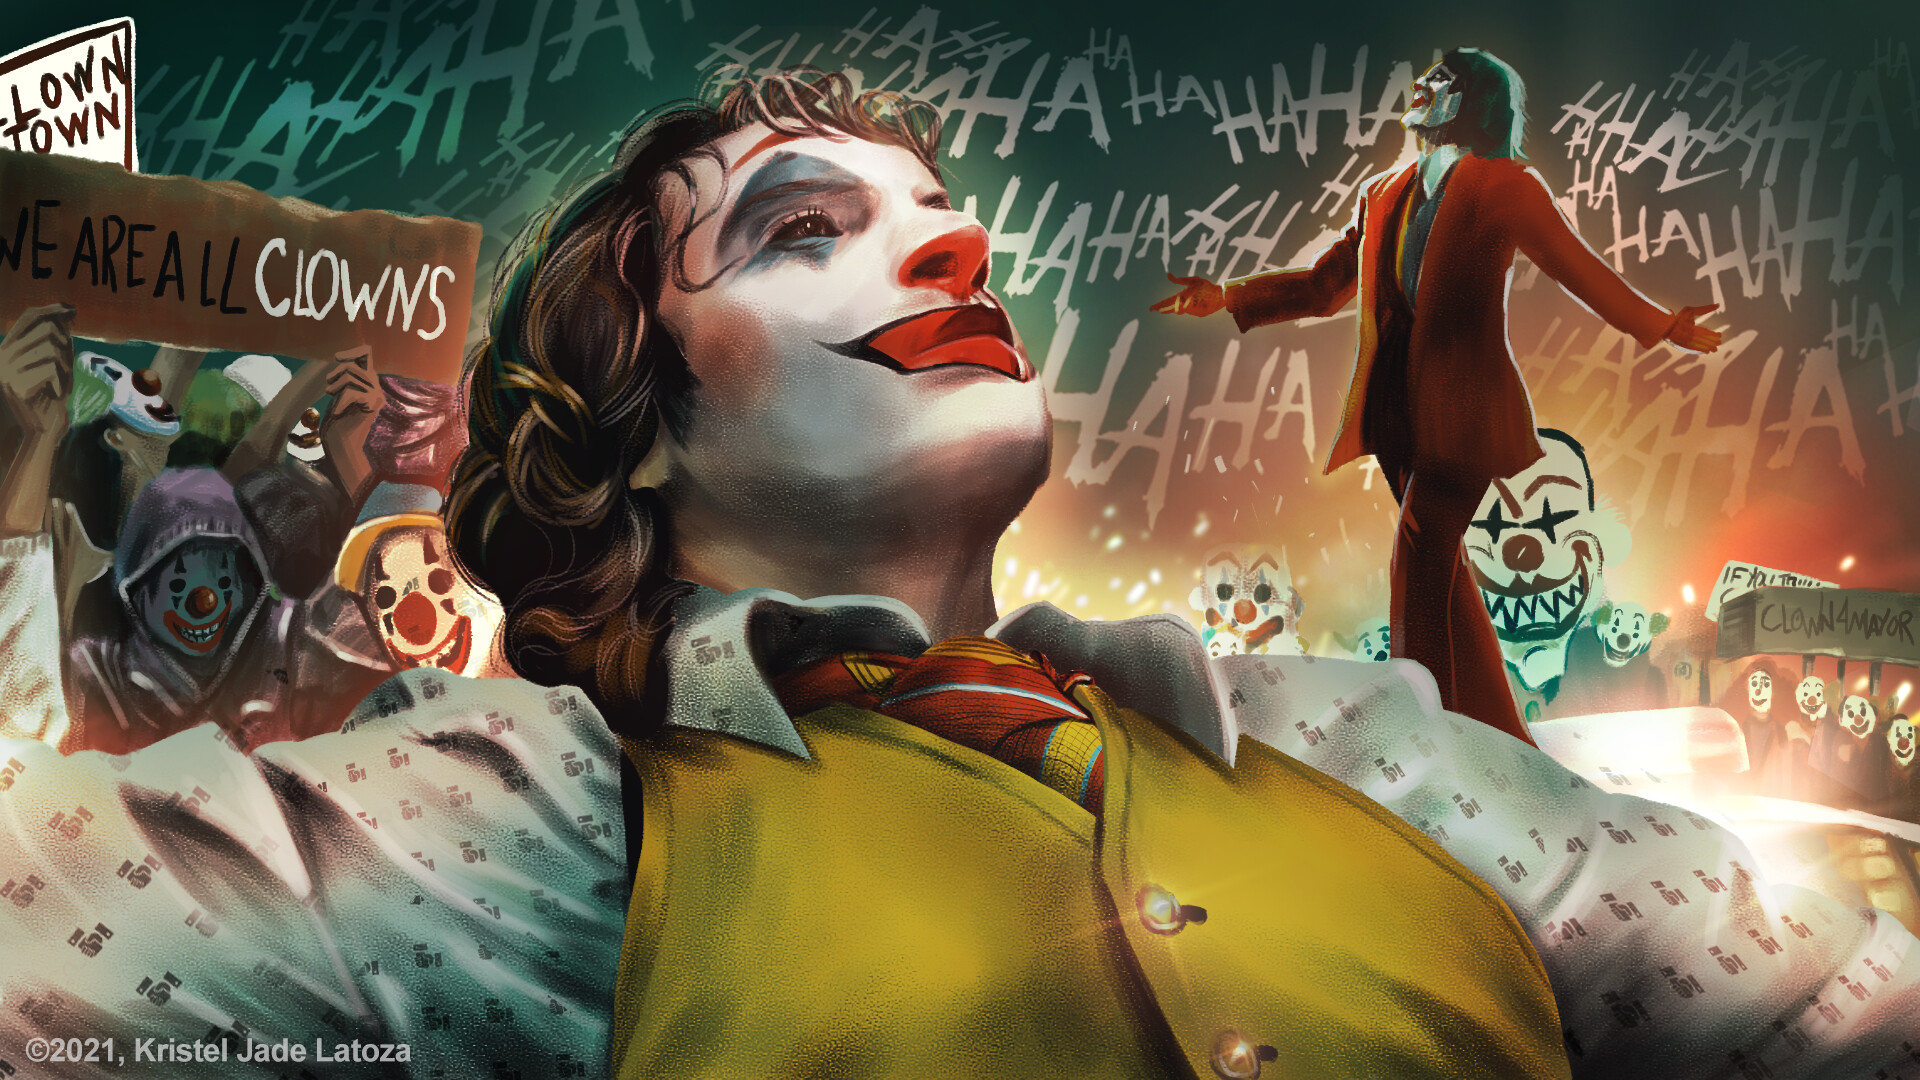 ArtStation - Joker 2019: Clown City Put On A Happy Face